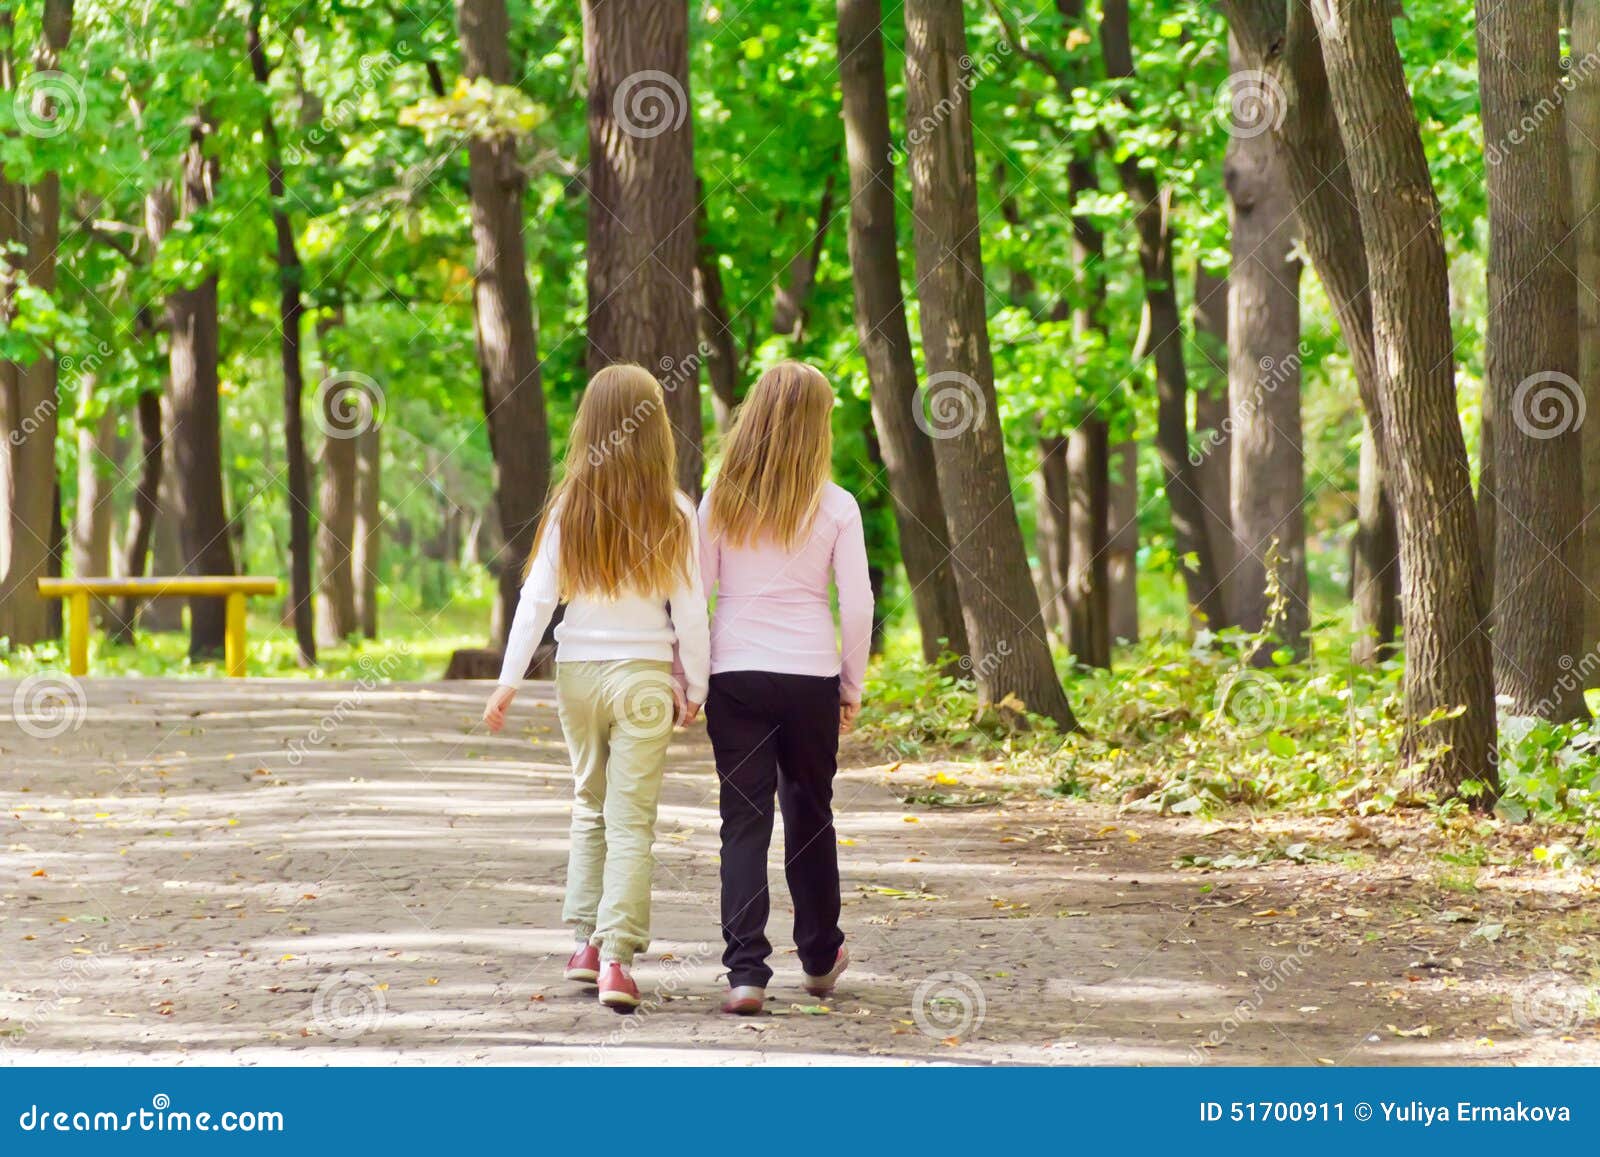 Ж м лето. Девочка гуляет в парке. Две девочки в парке. Две девочки гуляют в парке. Две девушки гуляют в парке.